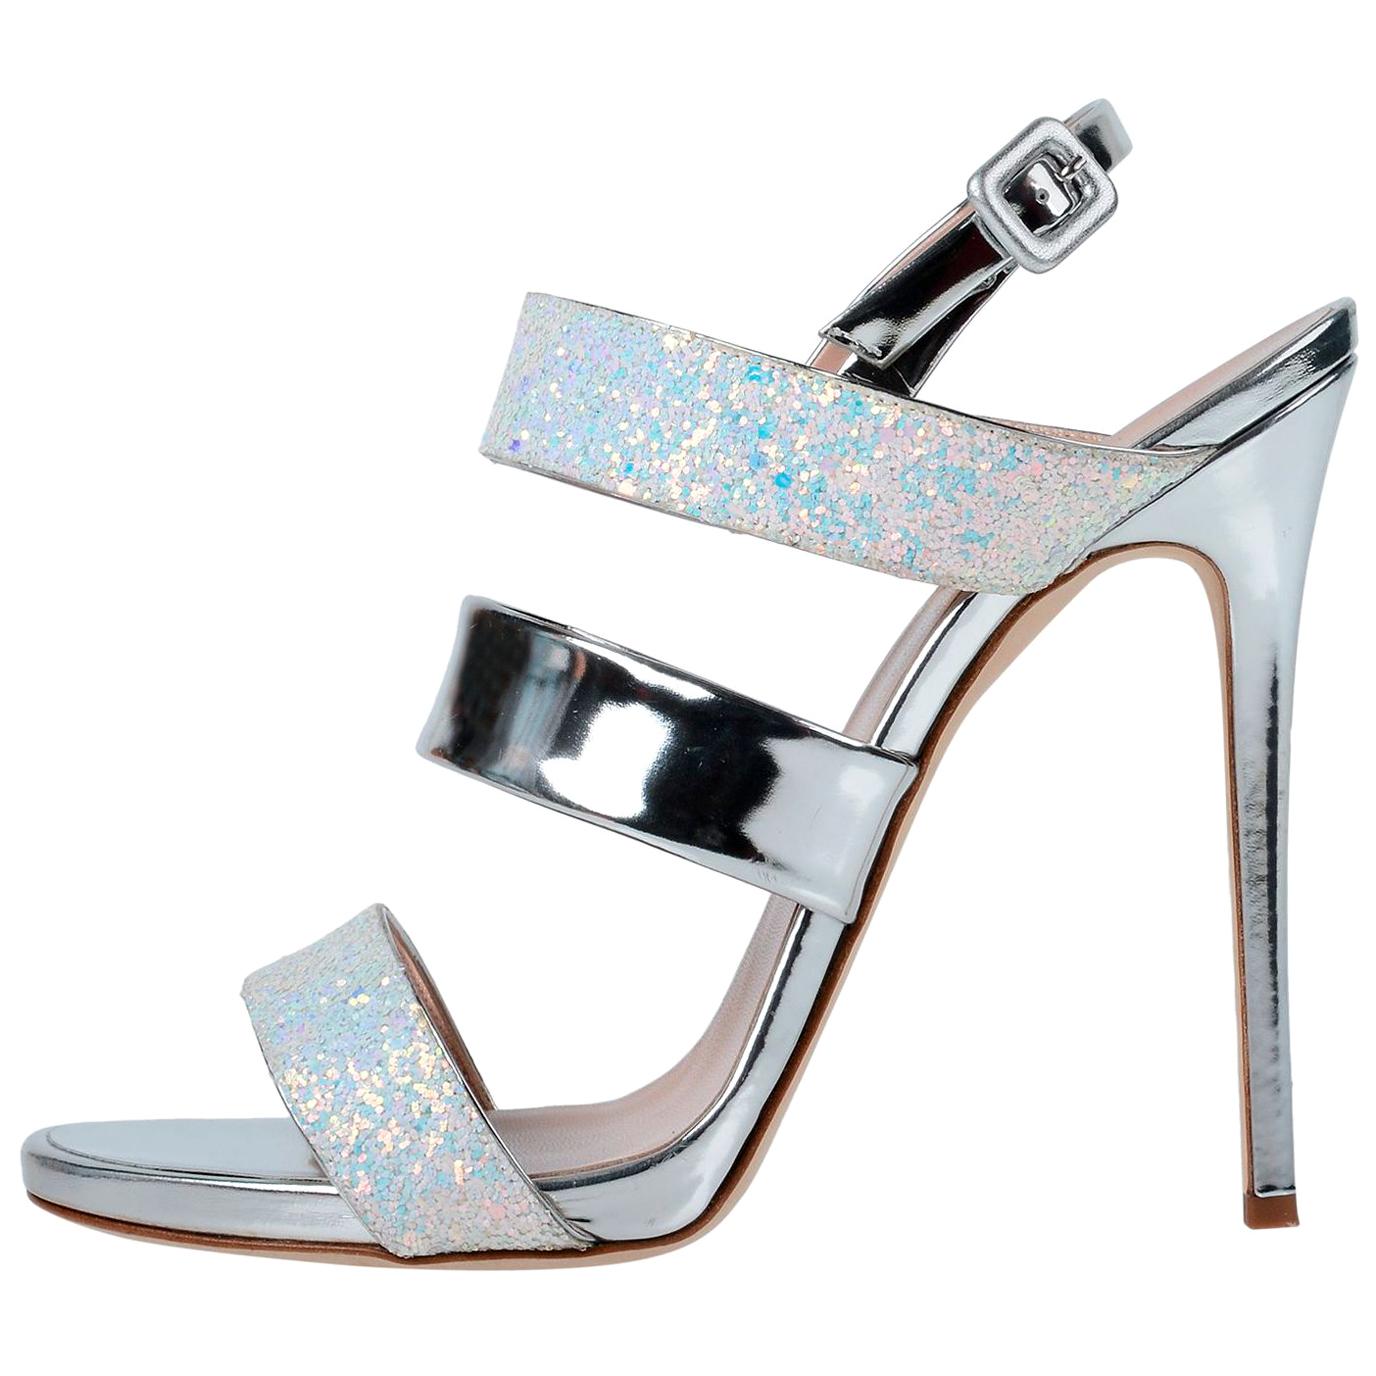 Giuseppe Zanotti NEW Silver Leather Glitter Evening Sandals Heels in Box